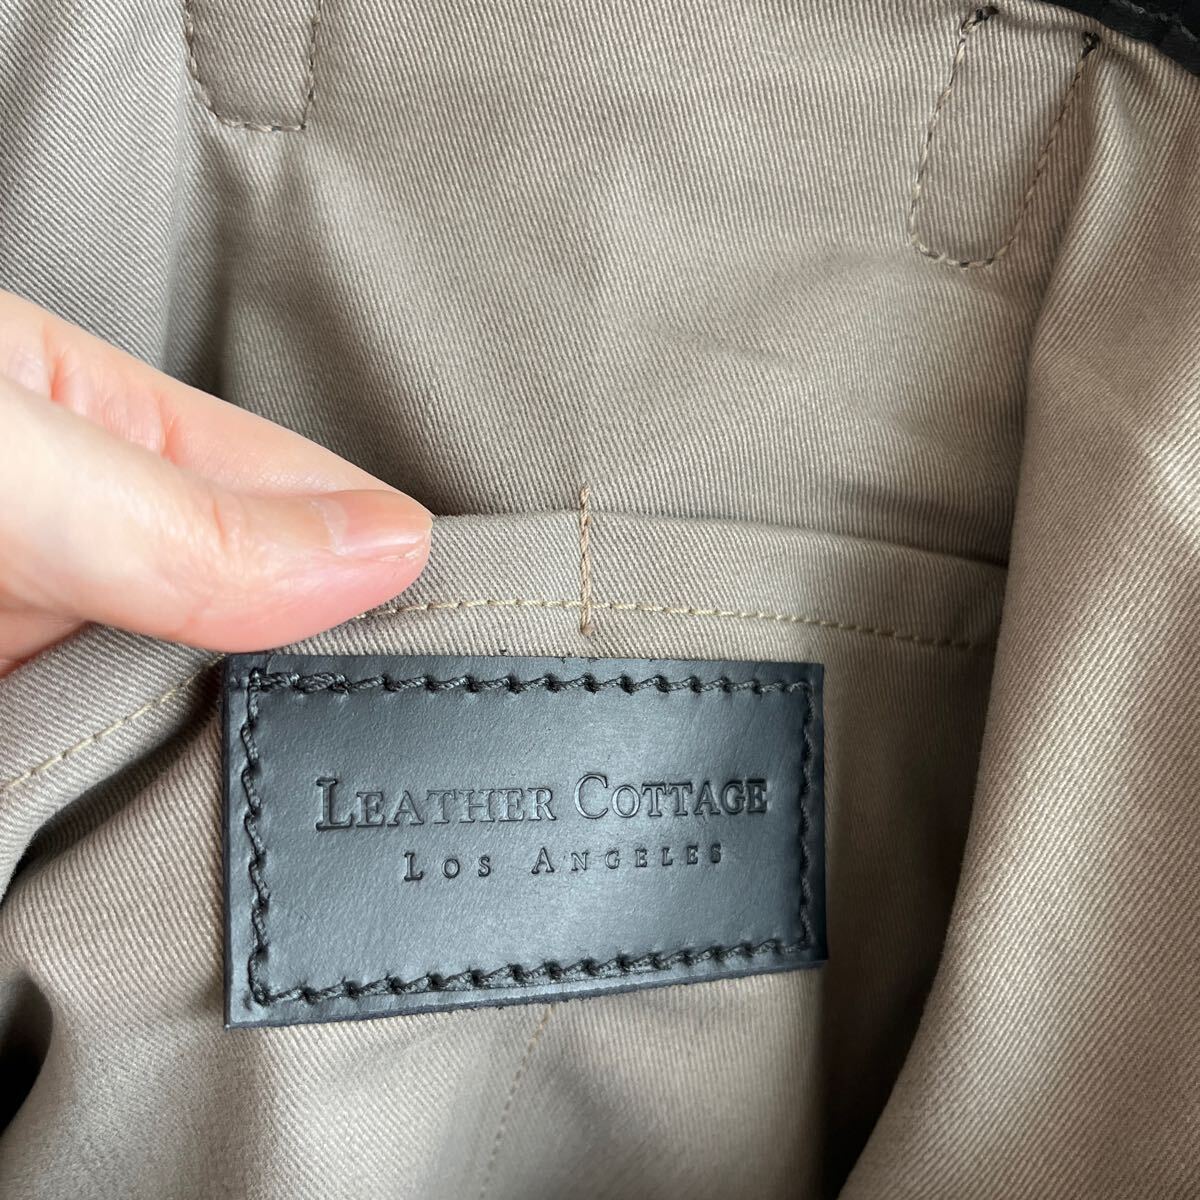 LEATHER COTTAGE Los Angeles leather kote-ji tote bag 